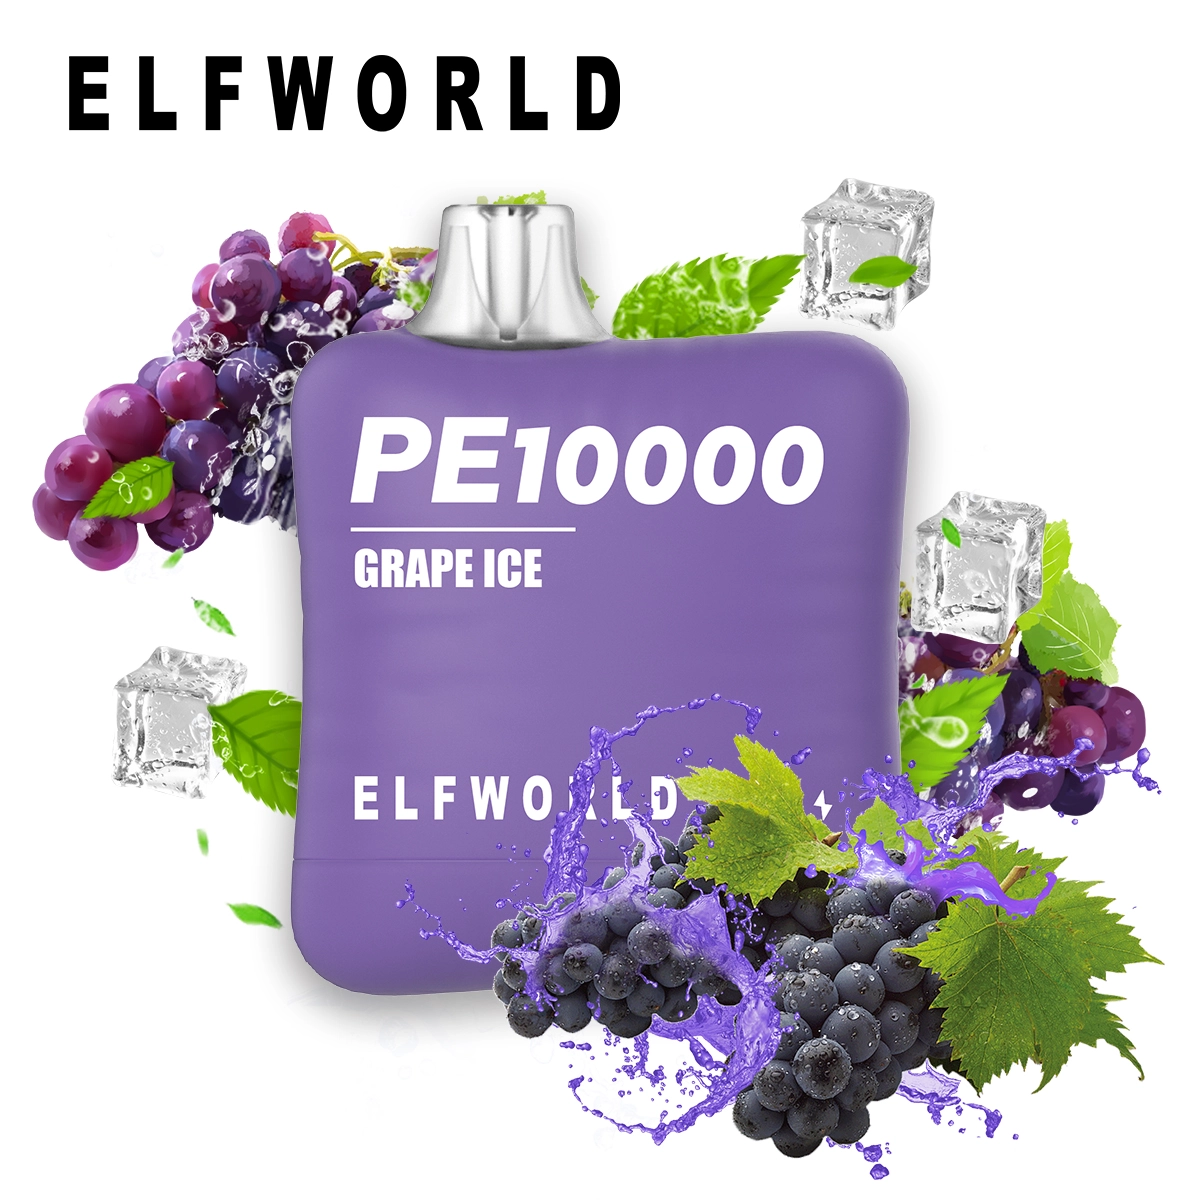 Elf World PE 10000 Grape Ice